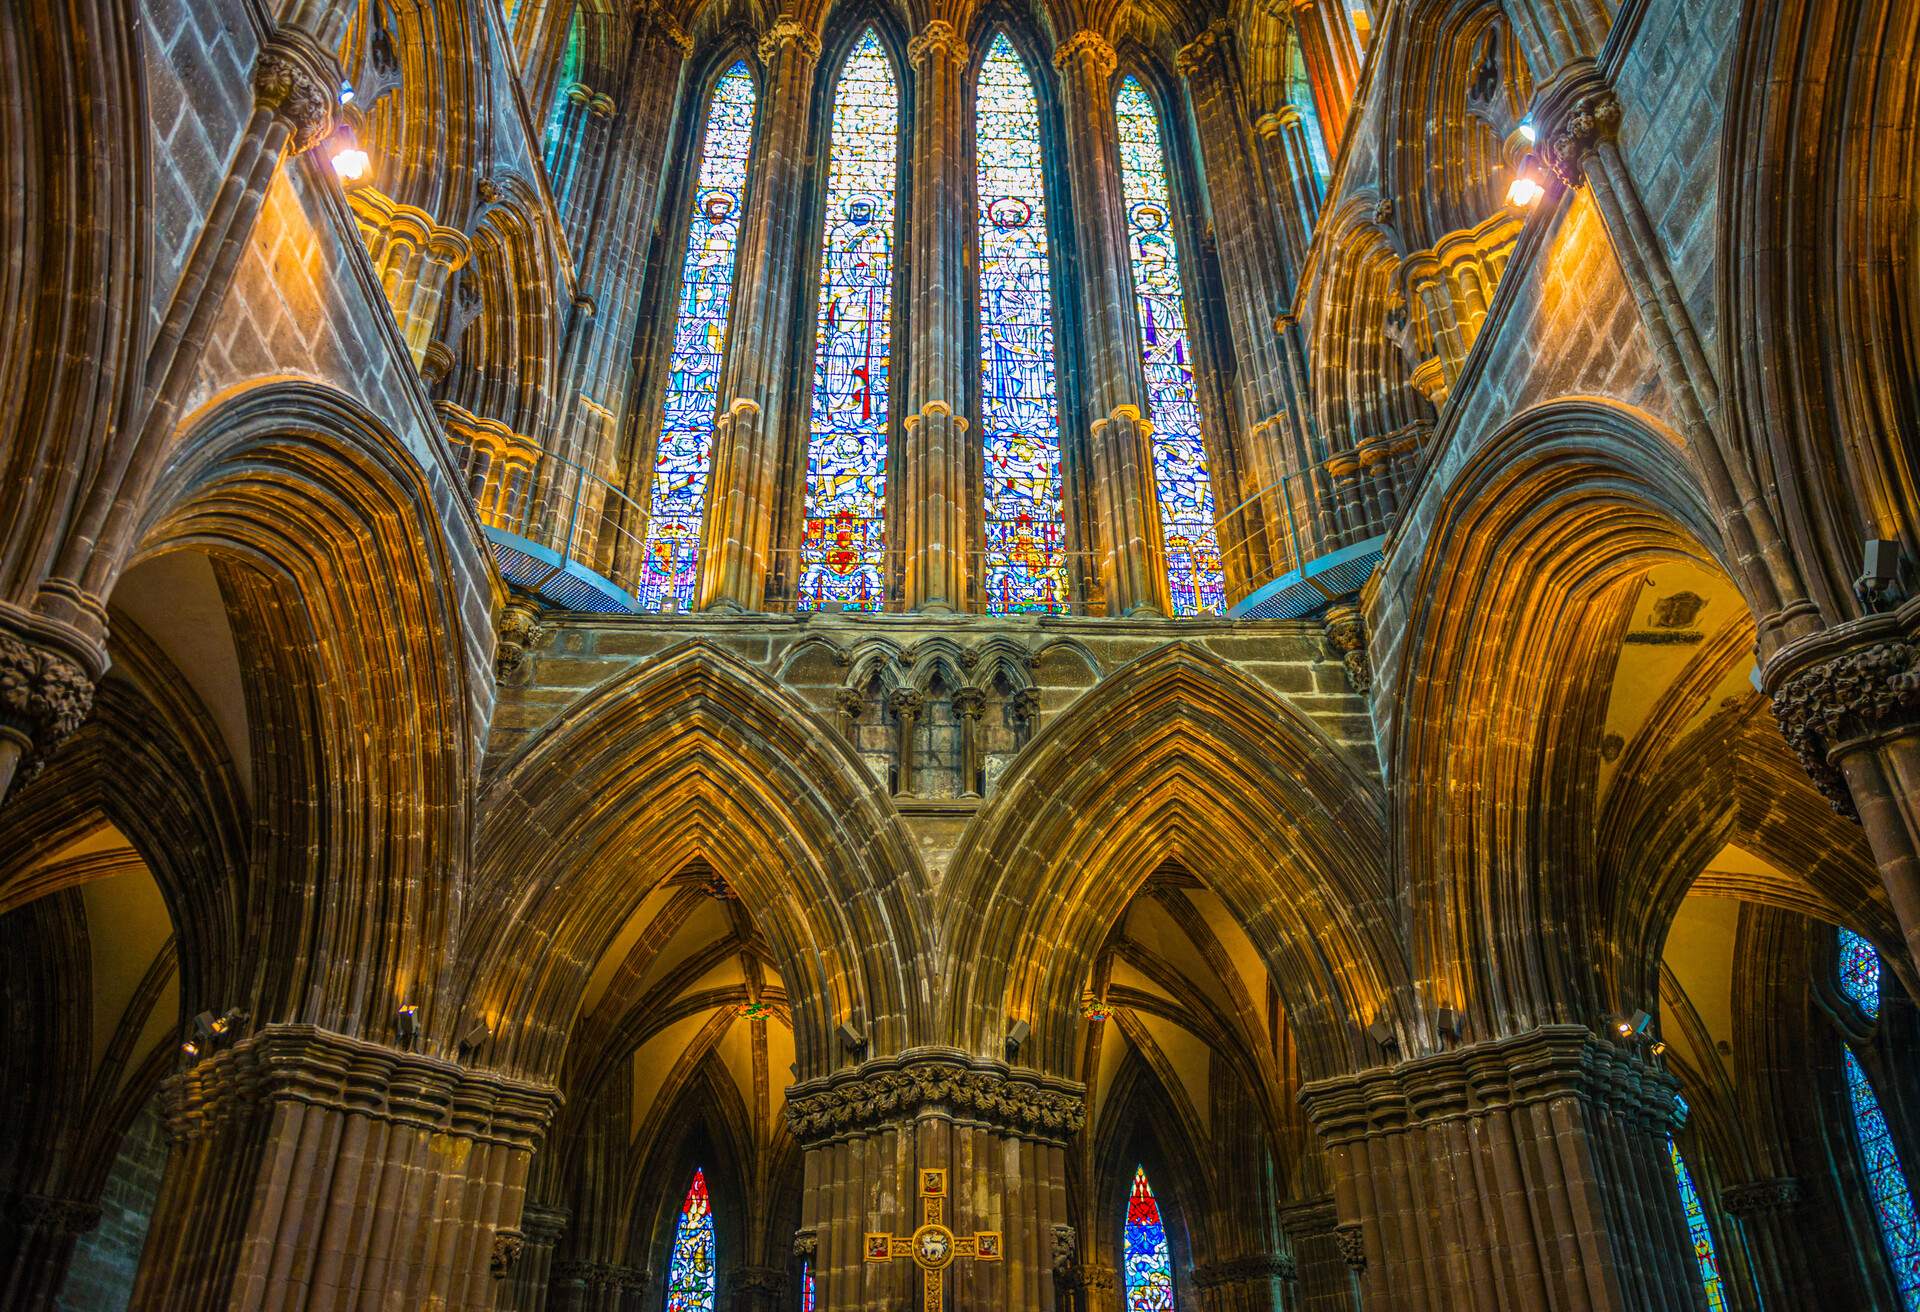 The first stone-built Glasgow cathedral, Glasgow, Scotland, United Kingdom (UK) - September 09, 2015